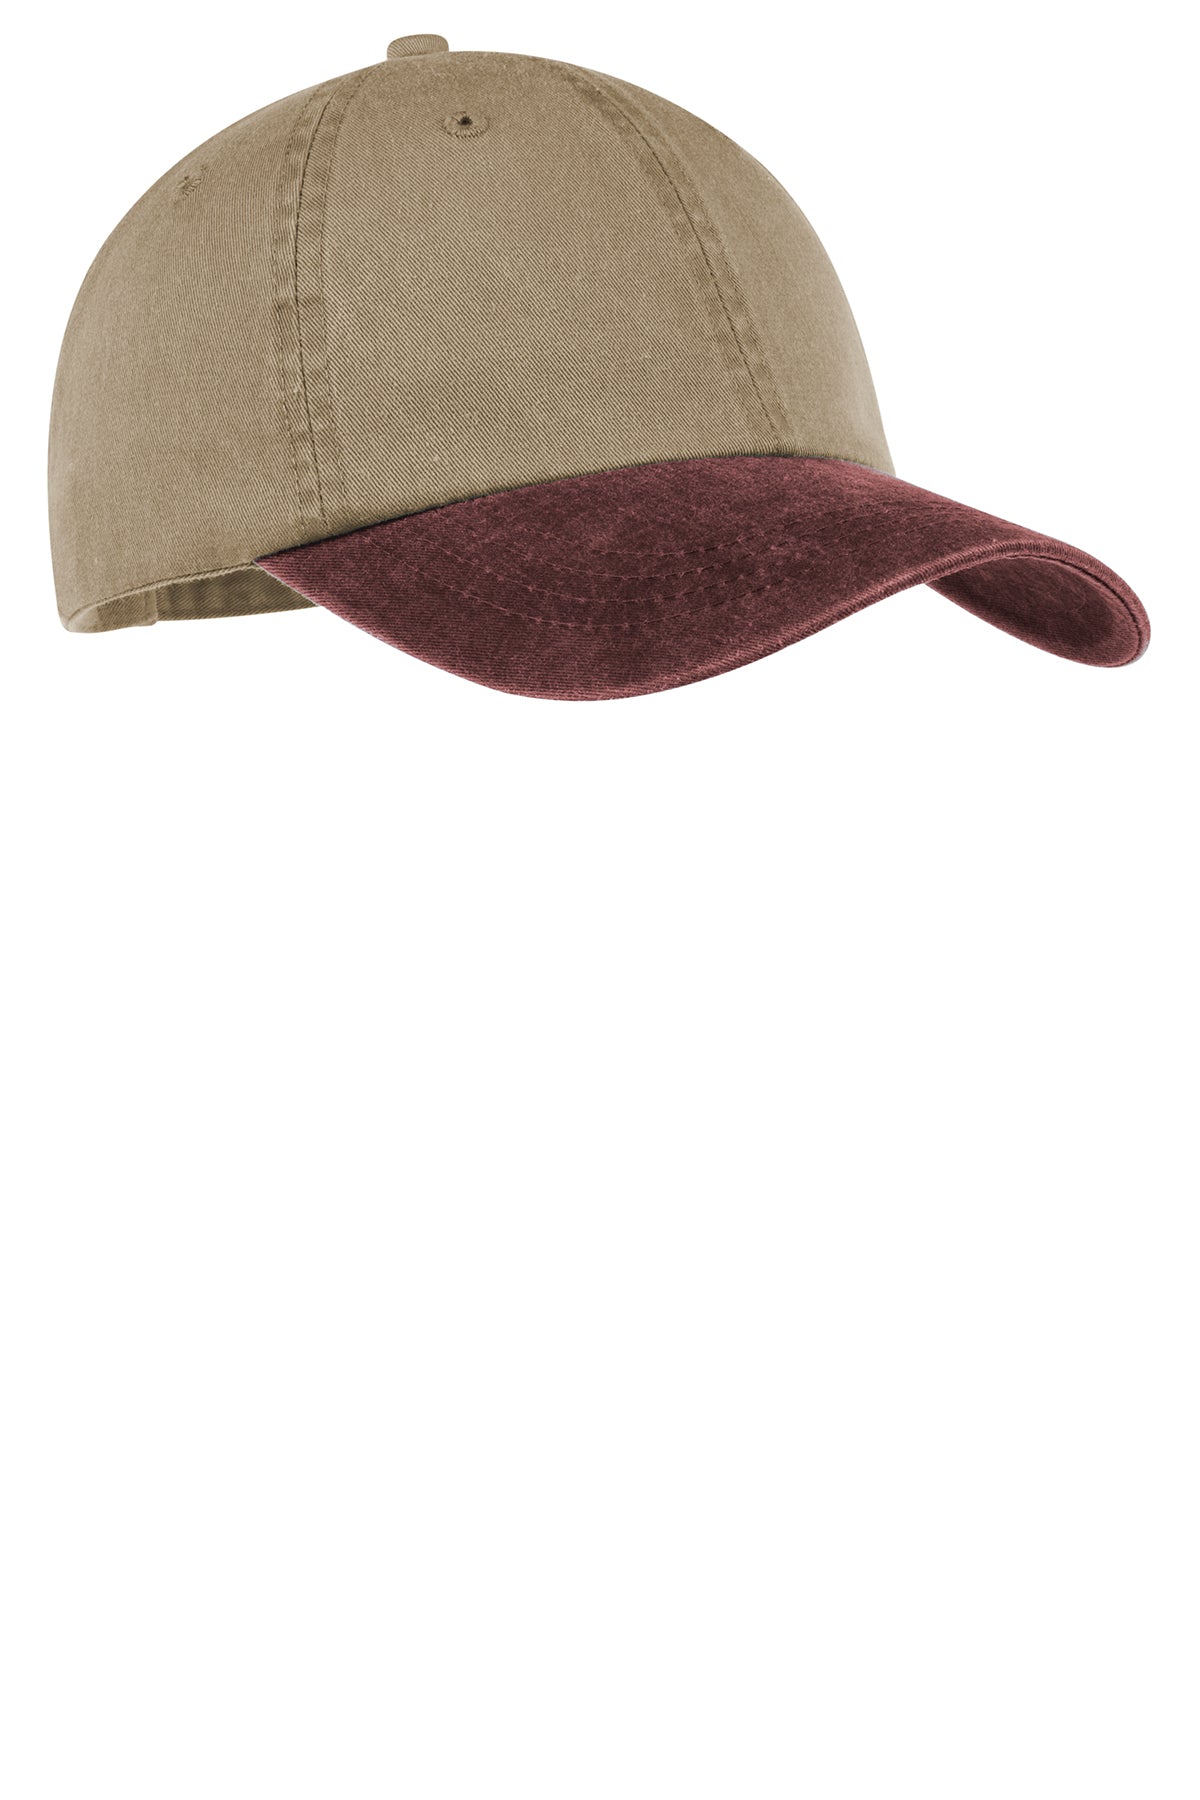 Port & Company Pigment Dyed Customized Caps, Khaki/Maroon